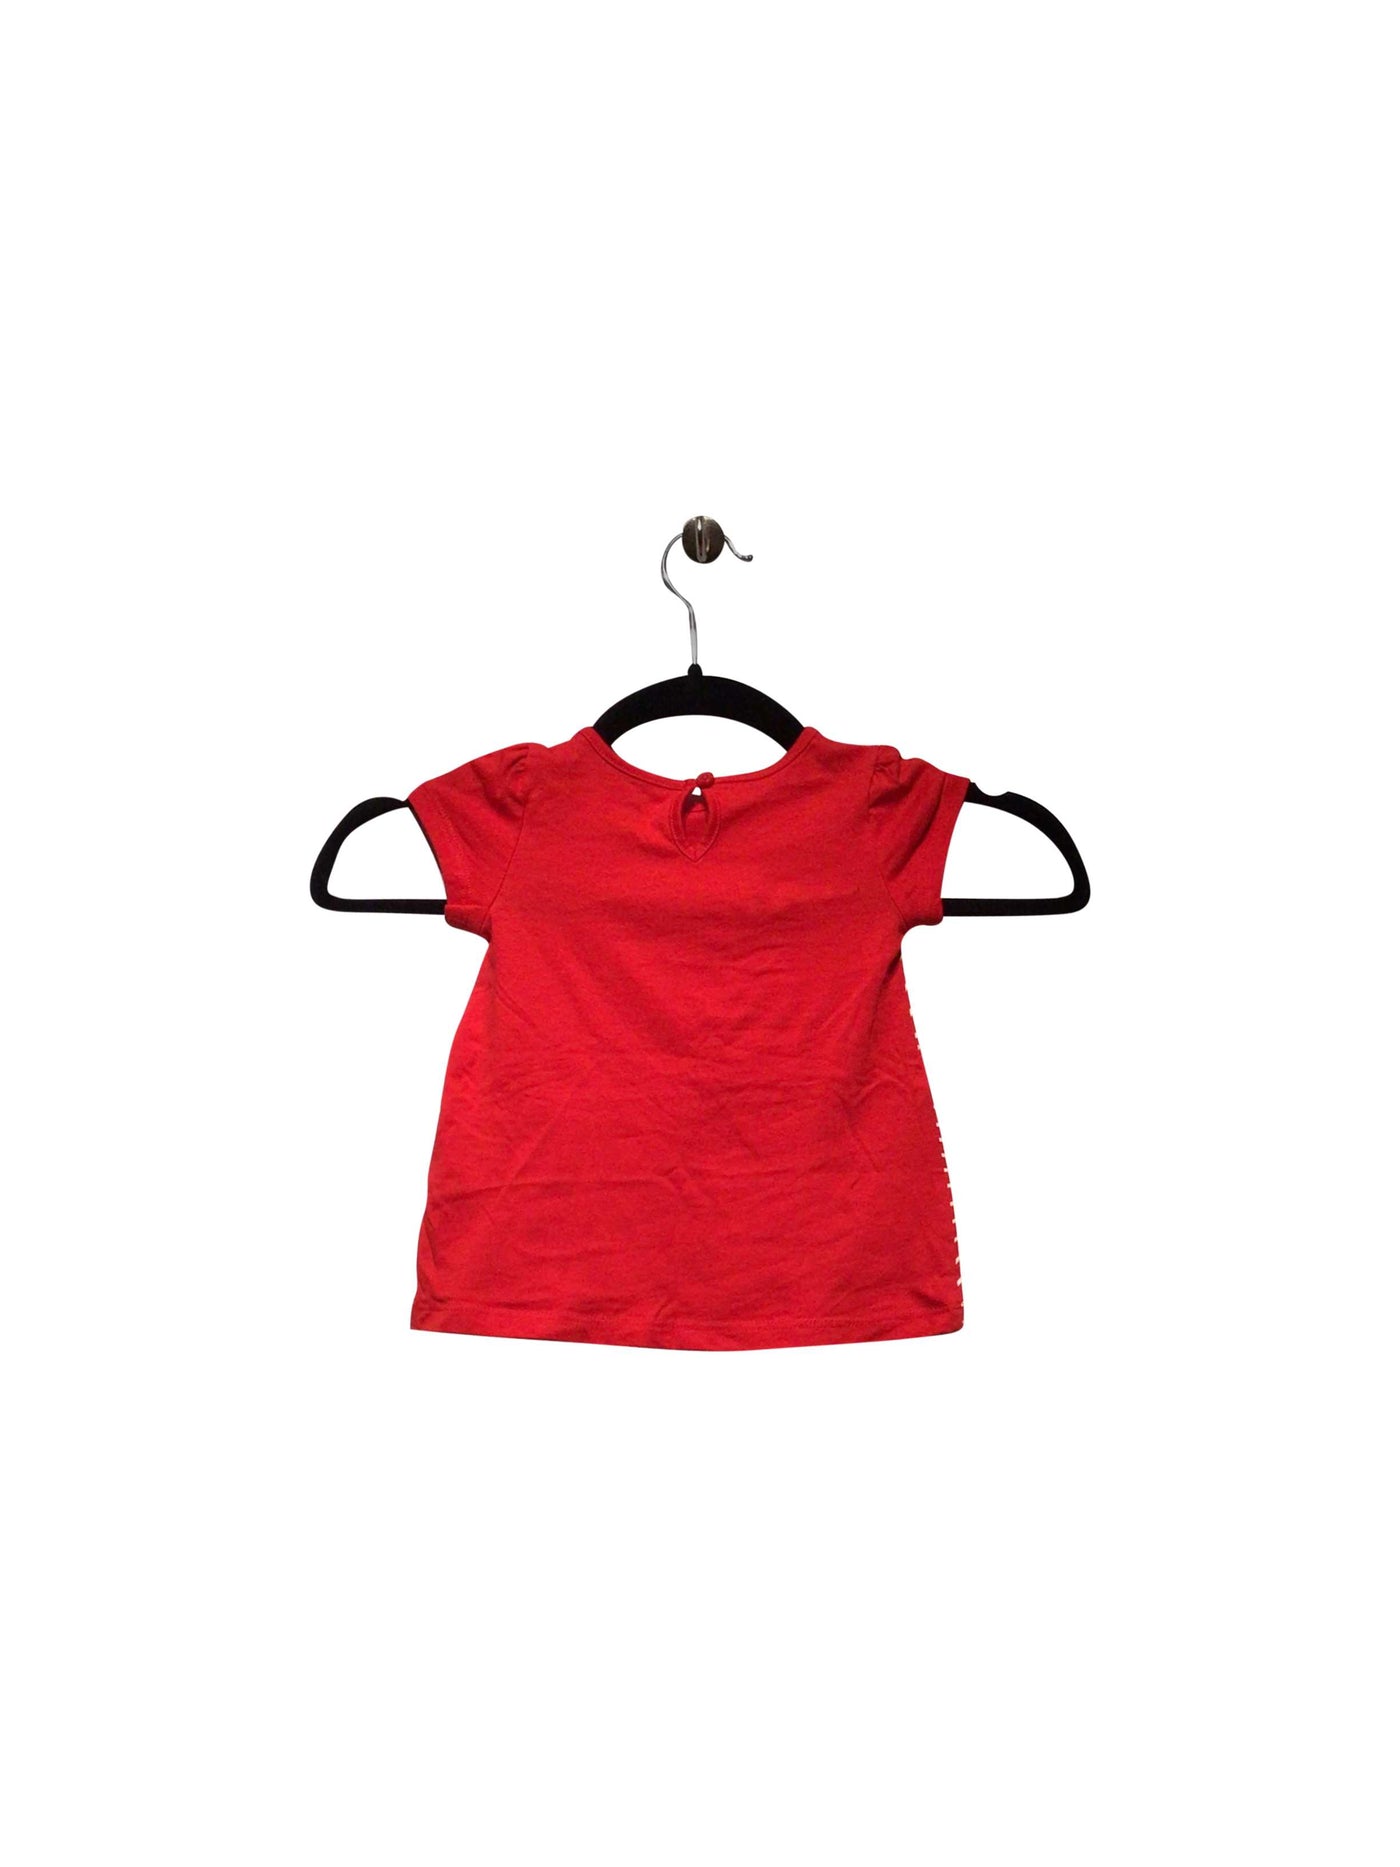 JOE FRESH Regular fit T-shirt in Red  -  3-6M  5.99 Koop